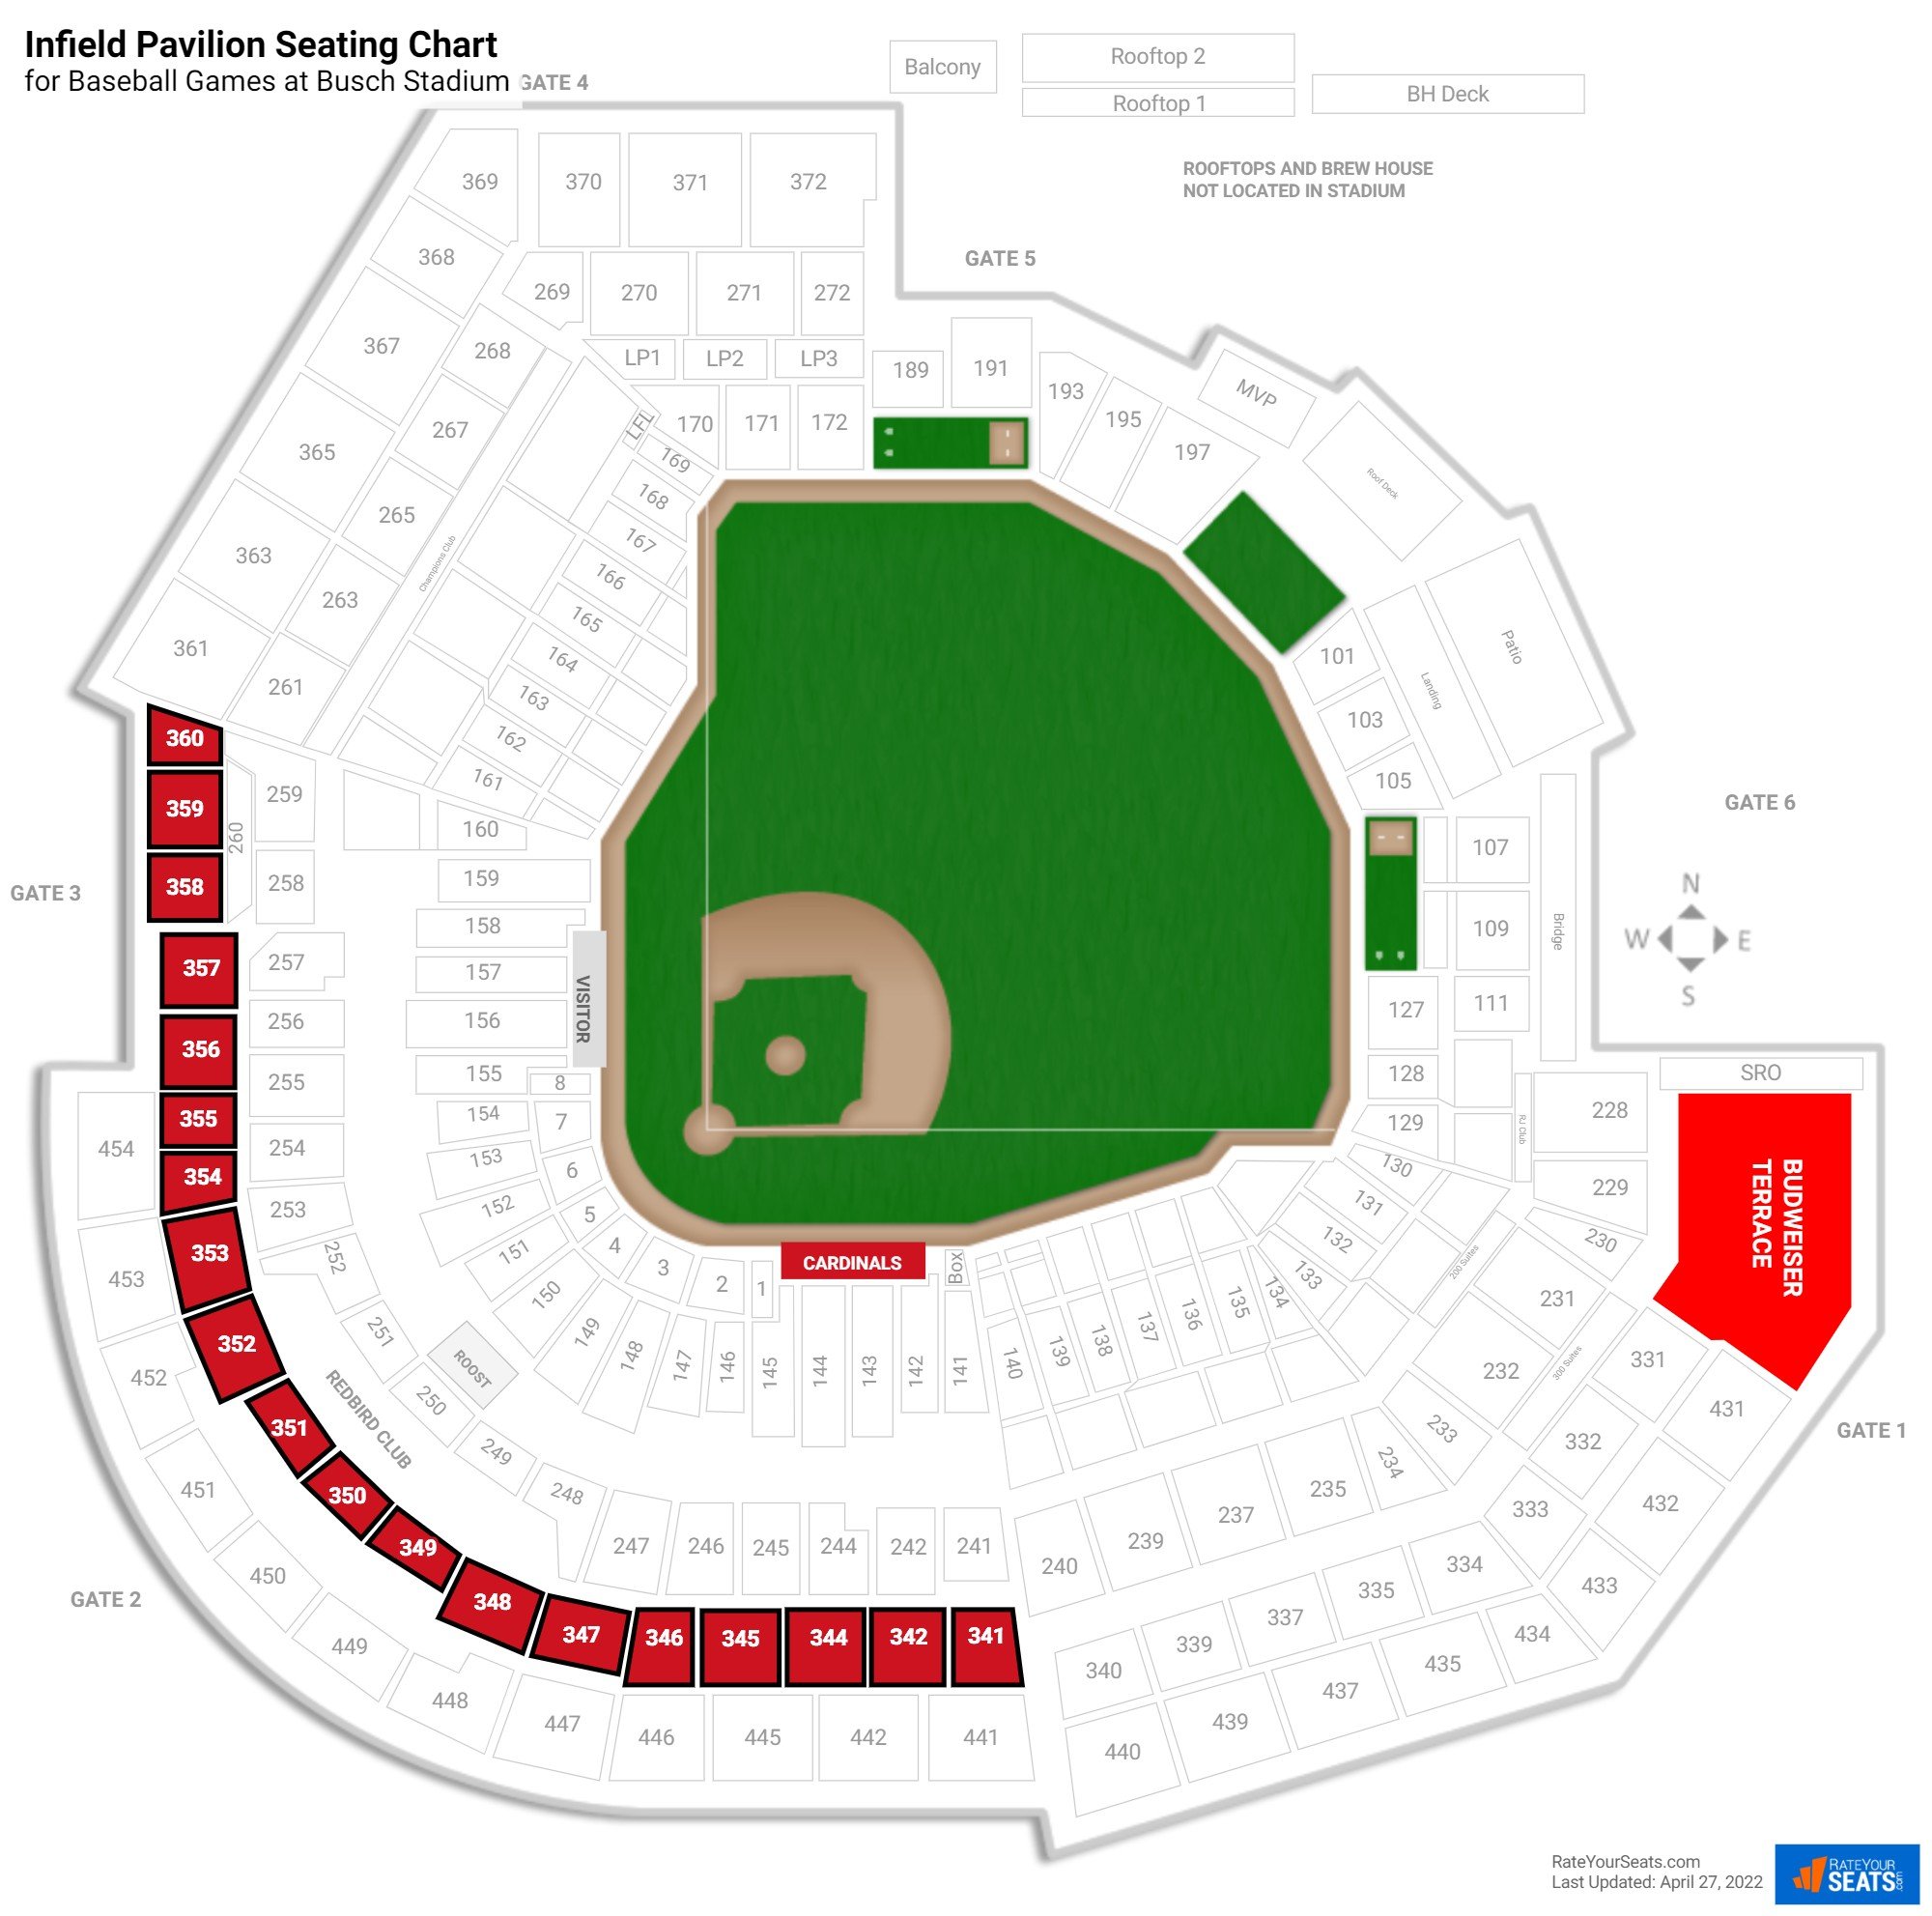 Baseball Infield Pavilion Seating Chart at Busch Stadium